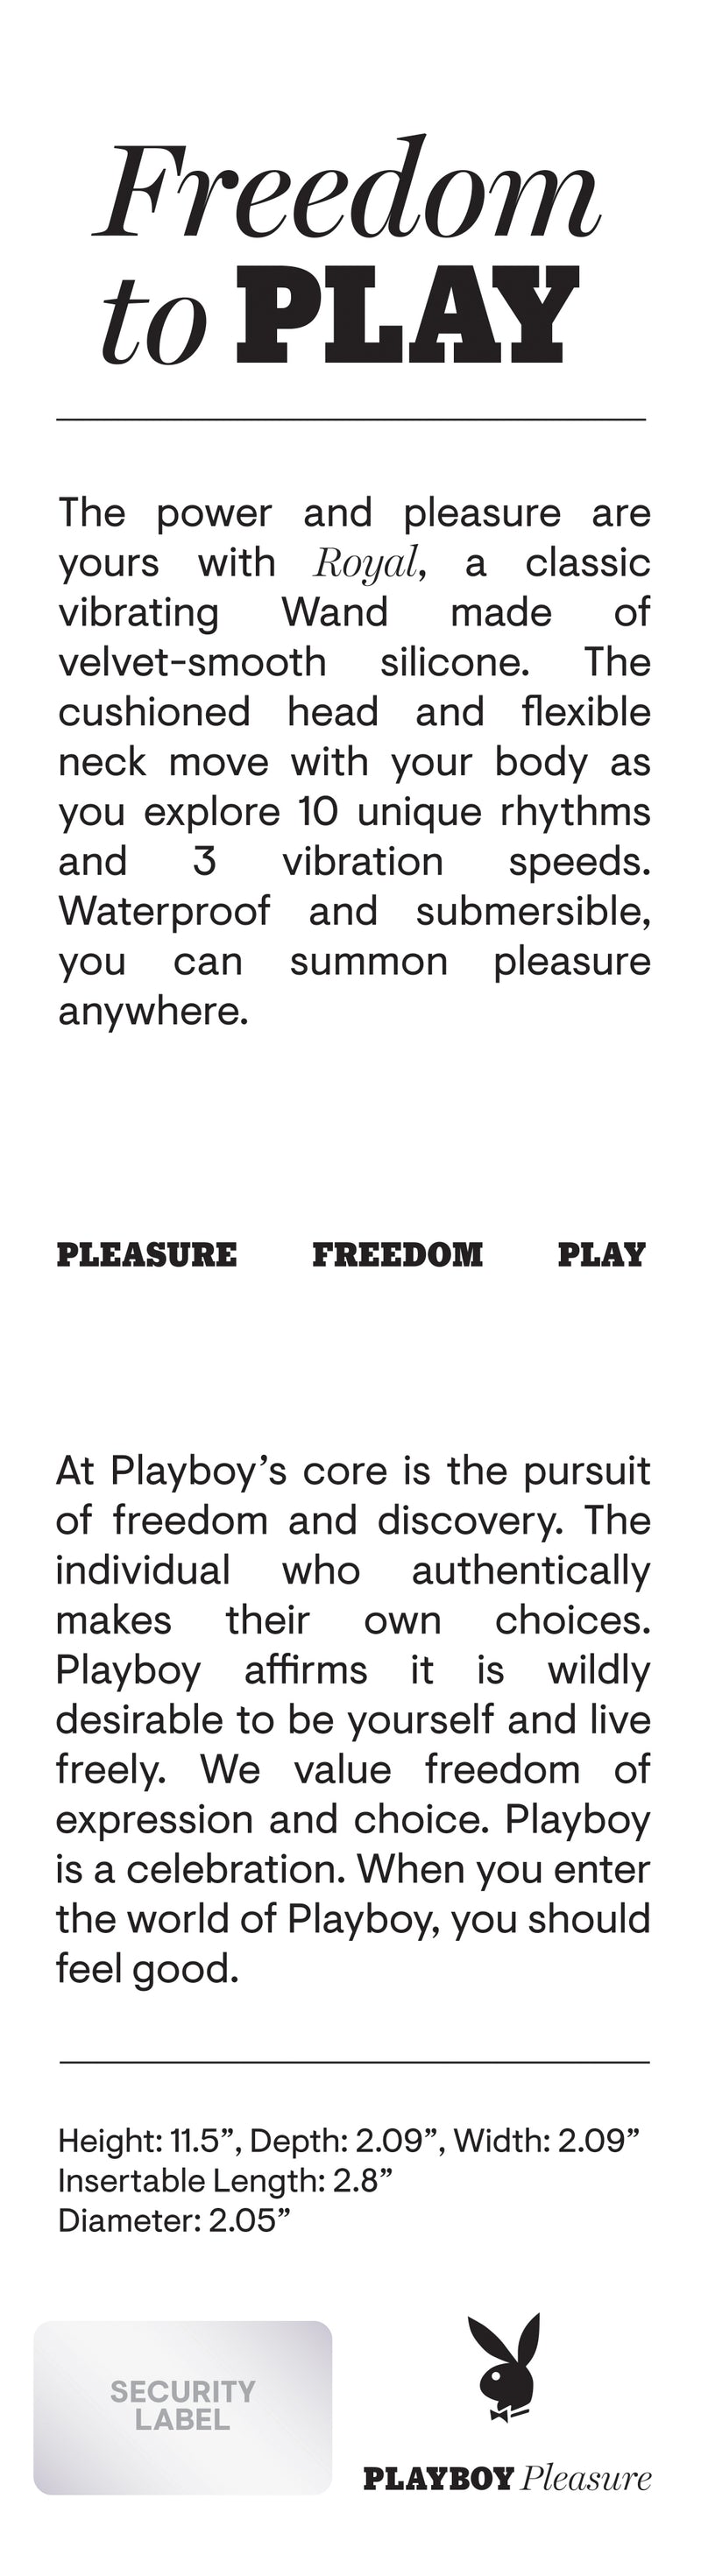 Royal Wand - Playboy Pleasure